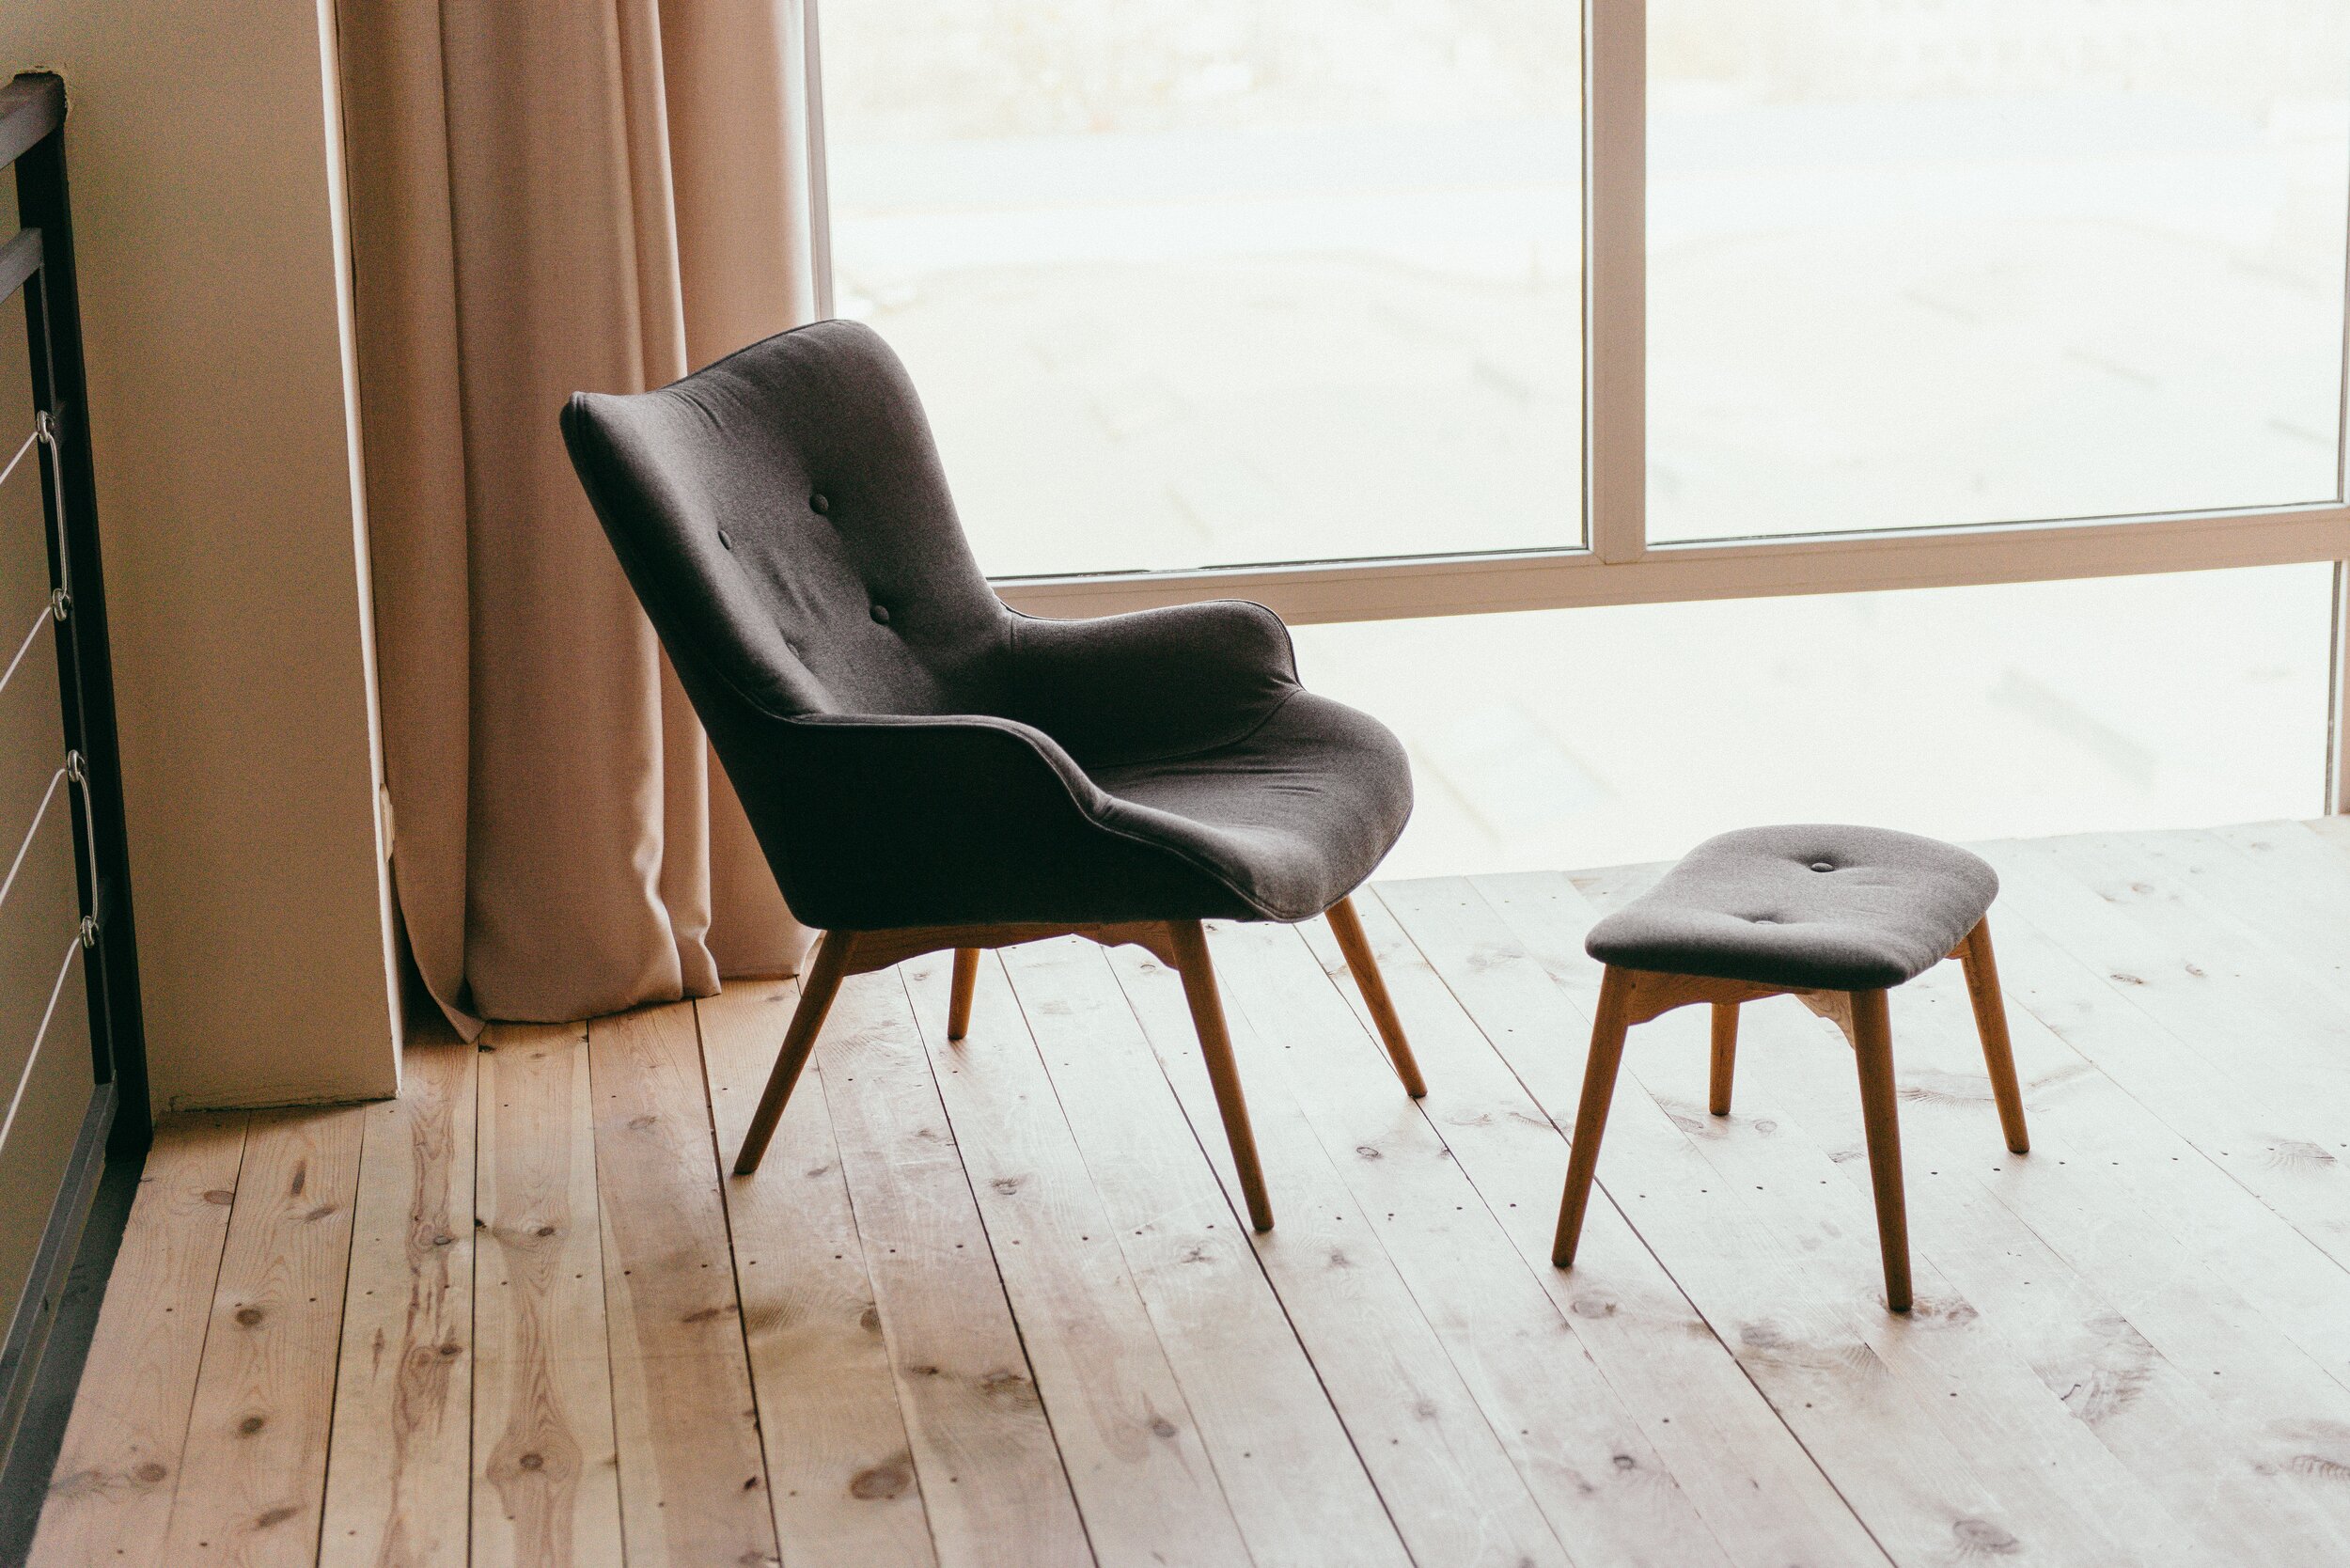 chair-comfort-contemporary-daylight-2082090 (1).jpg